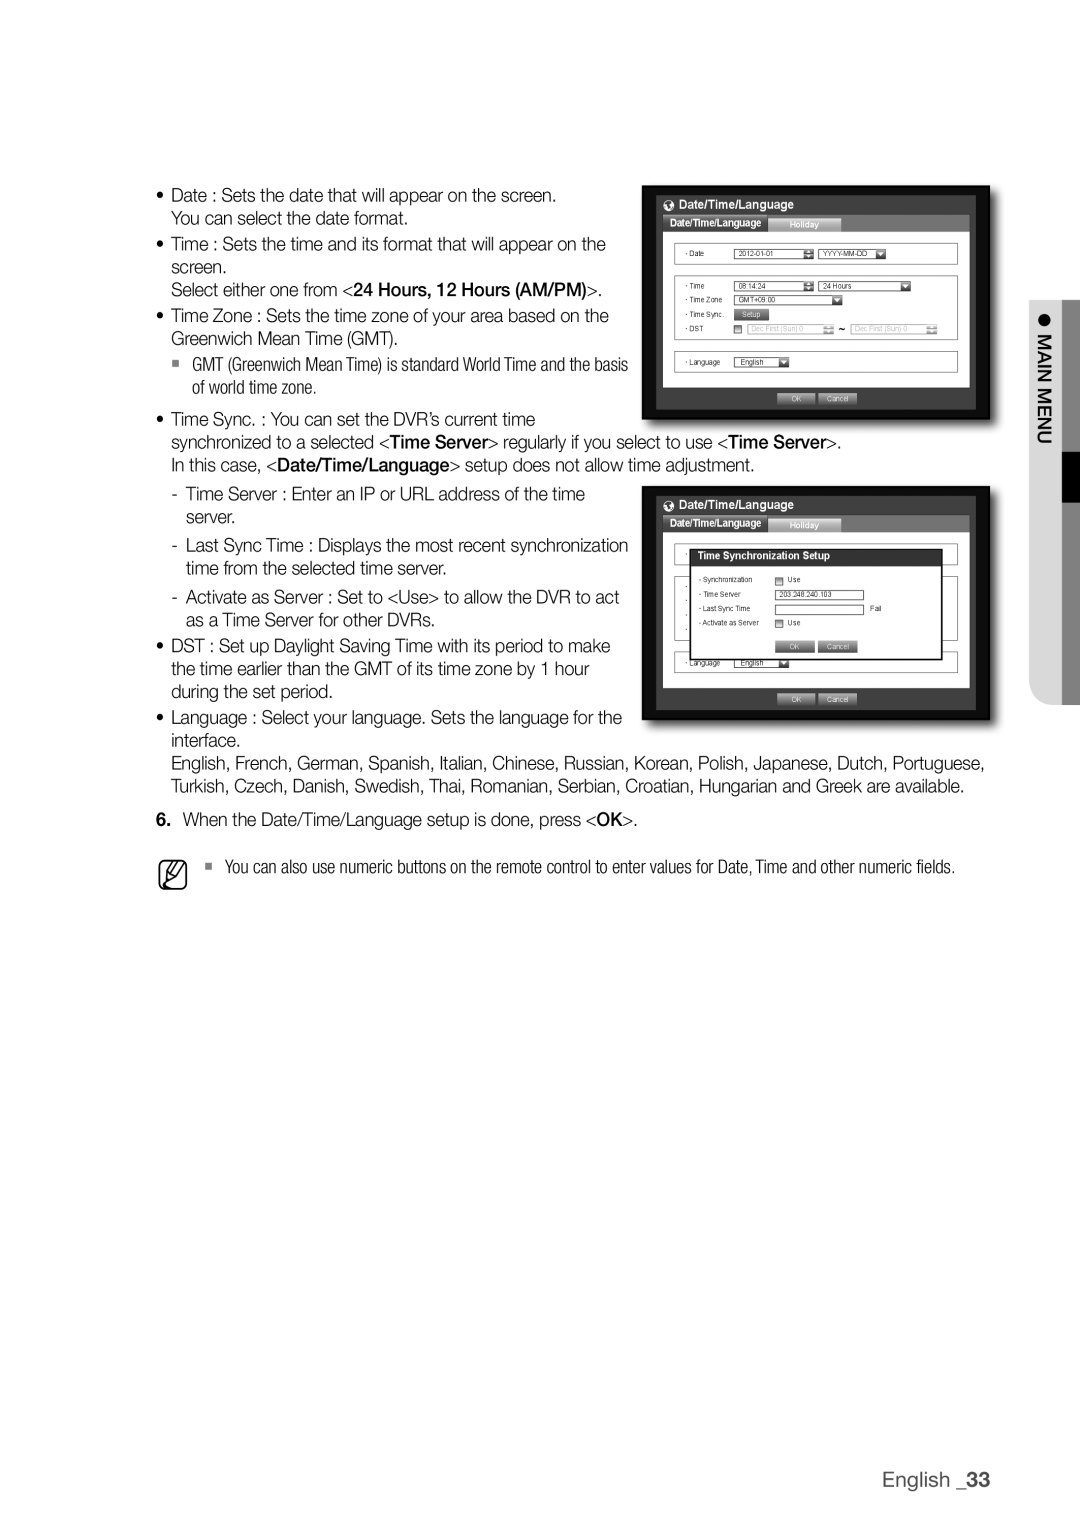 Samsung SDR3100 user manual English _33 